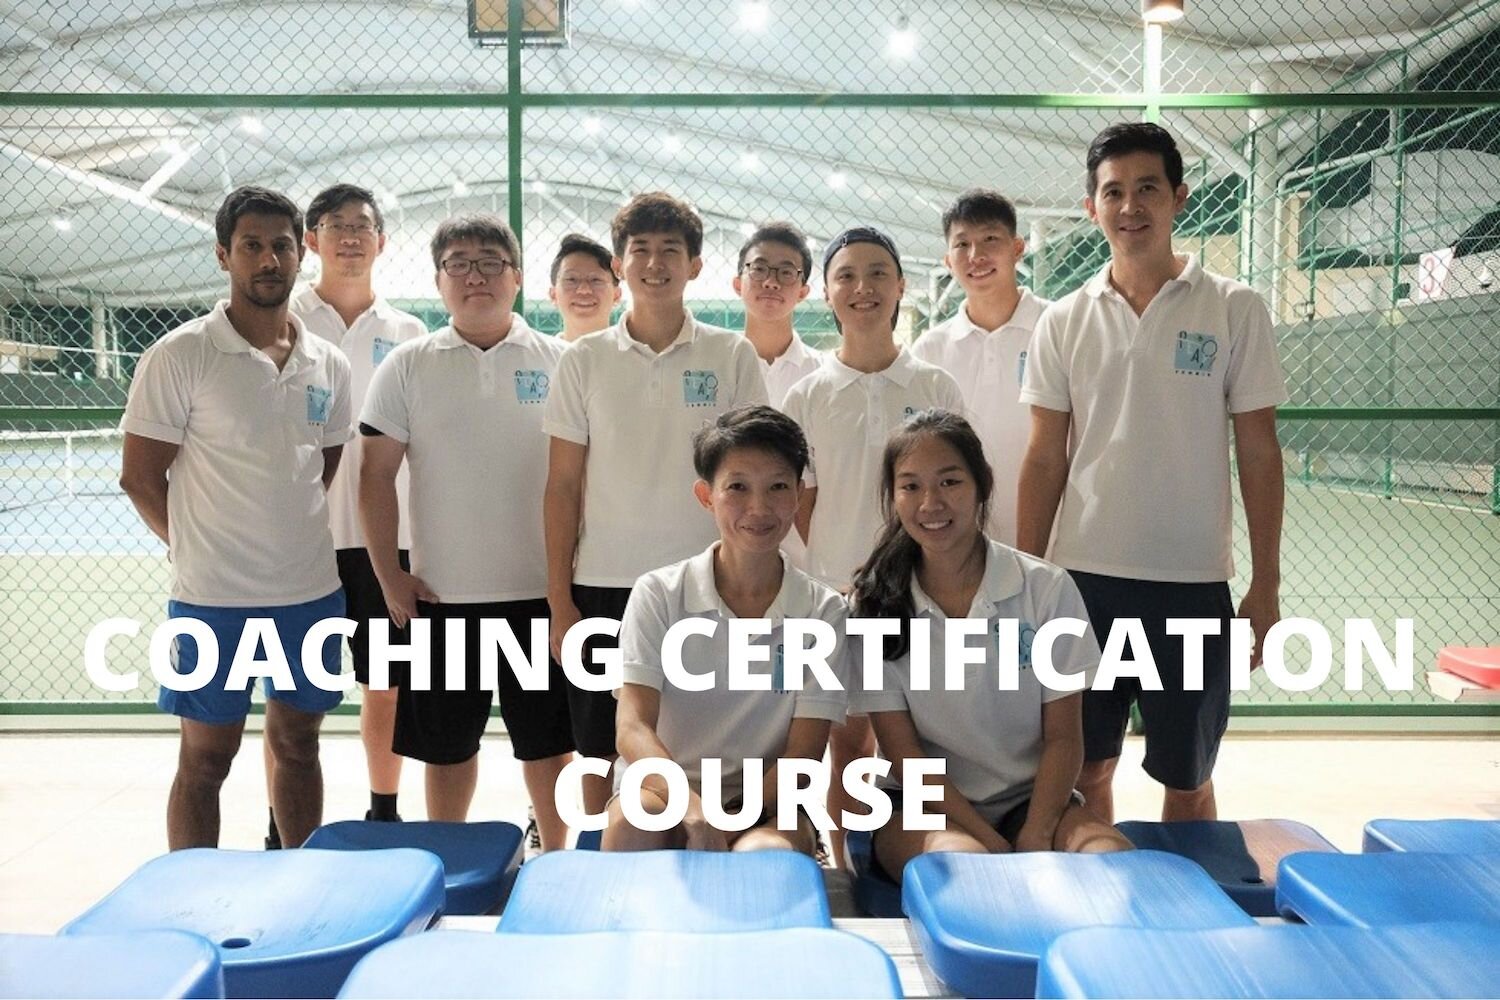 Tennis Coaching Certification Course (Copy) (Copy)